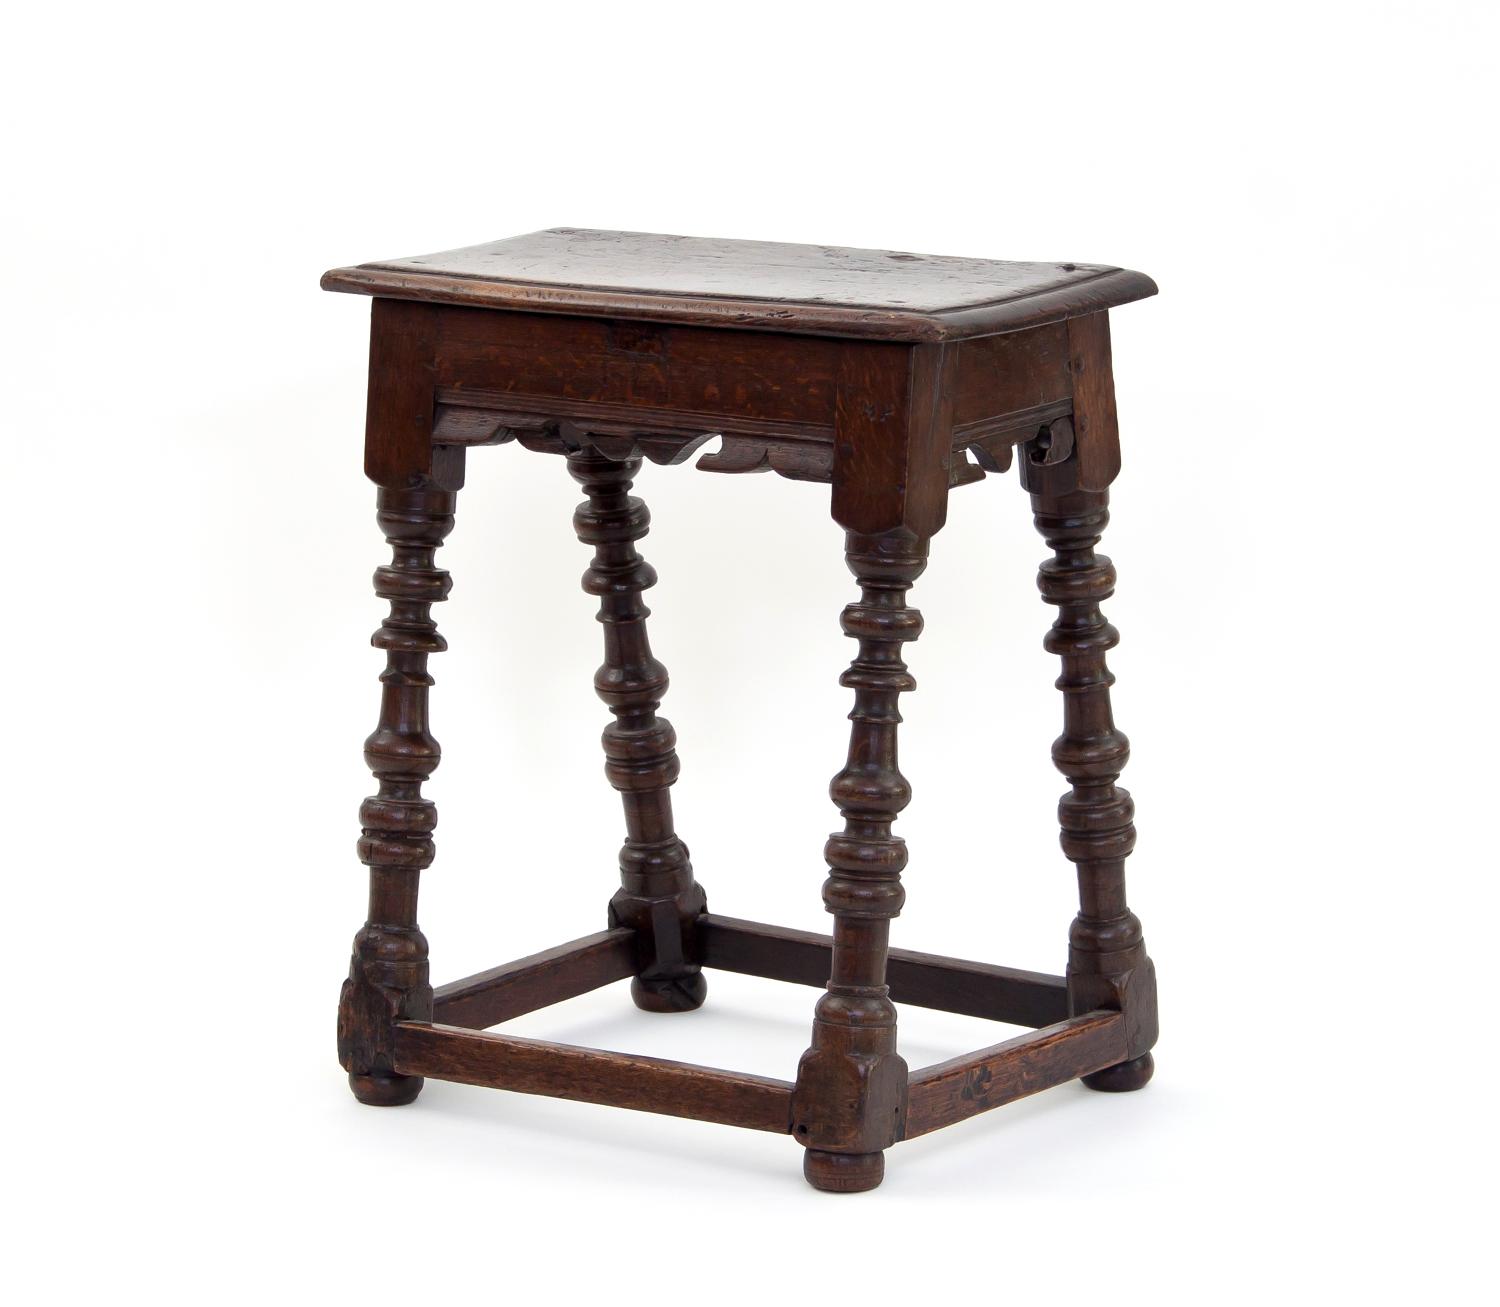 17th century English oak joint stool